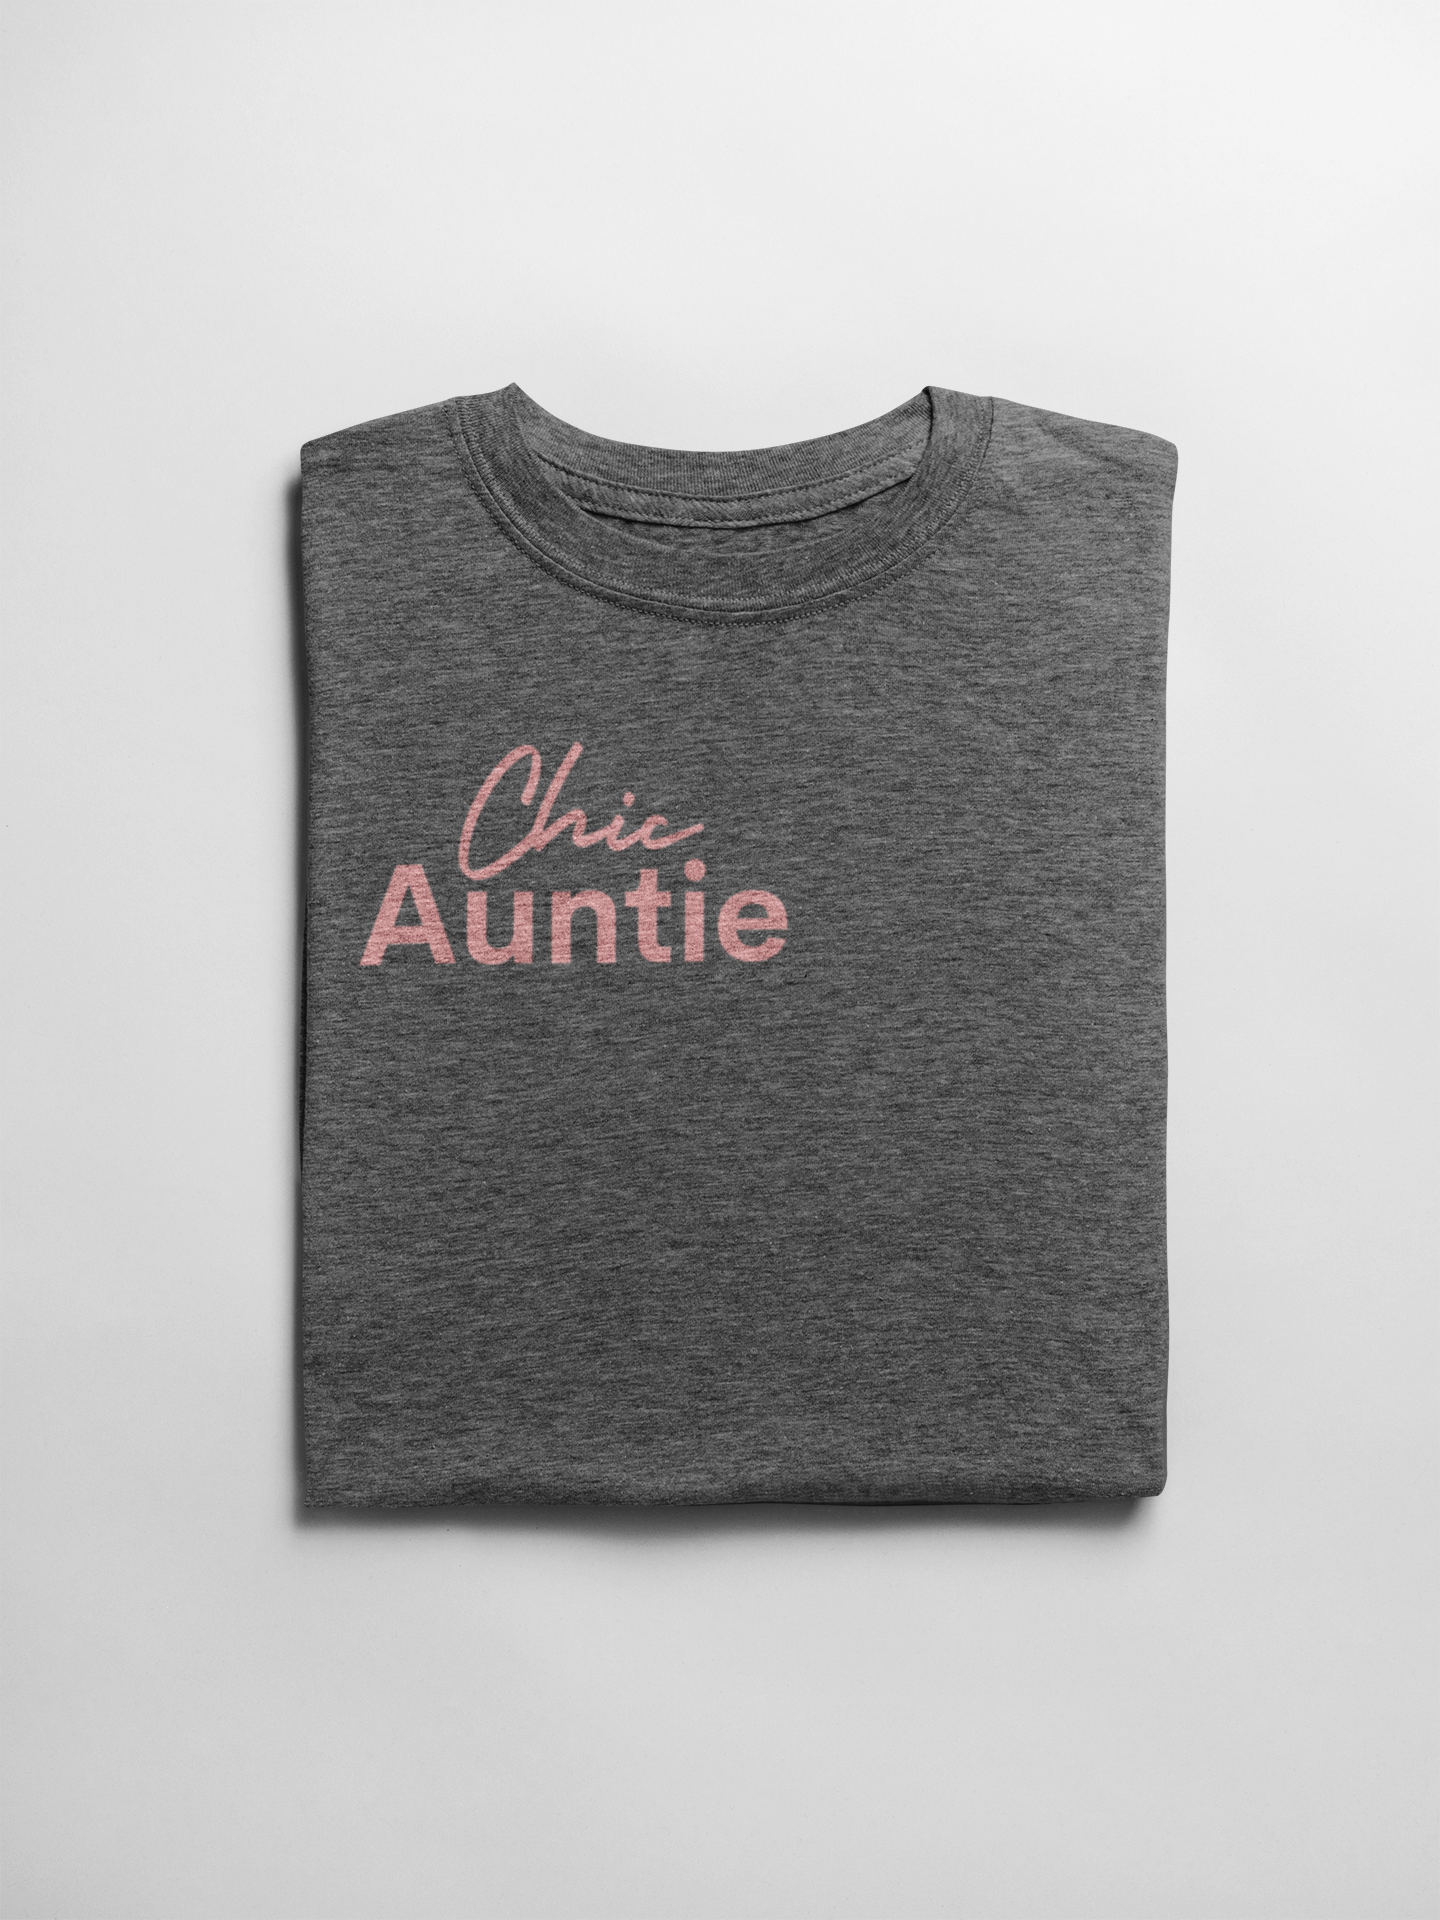 Chic Auntie Tee